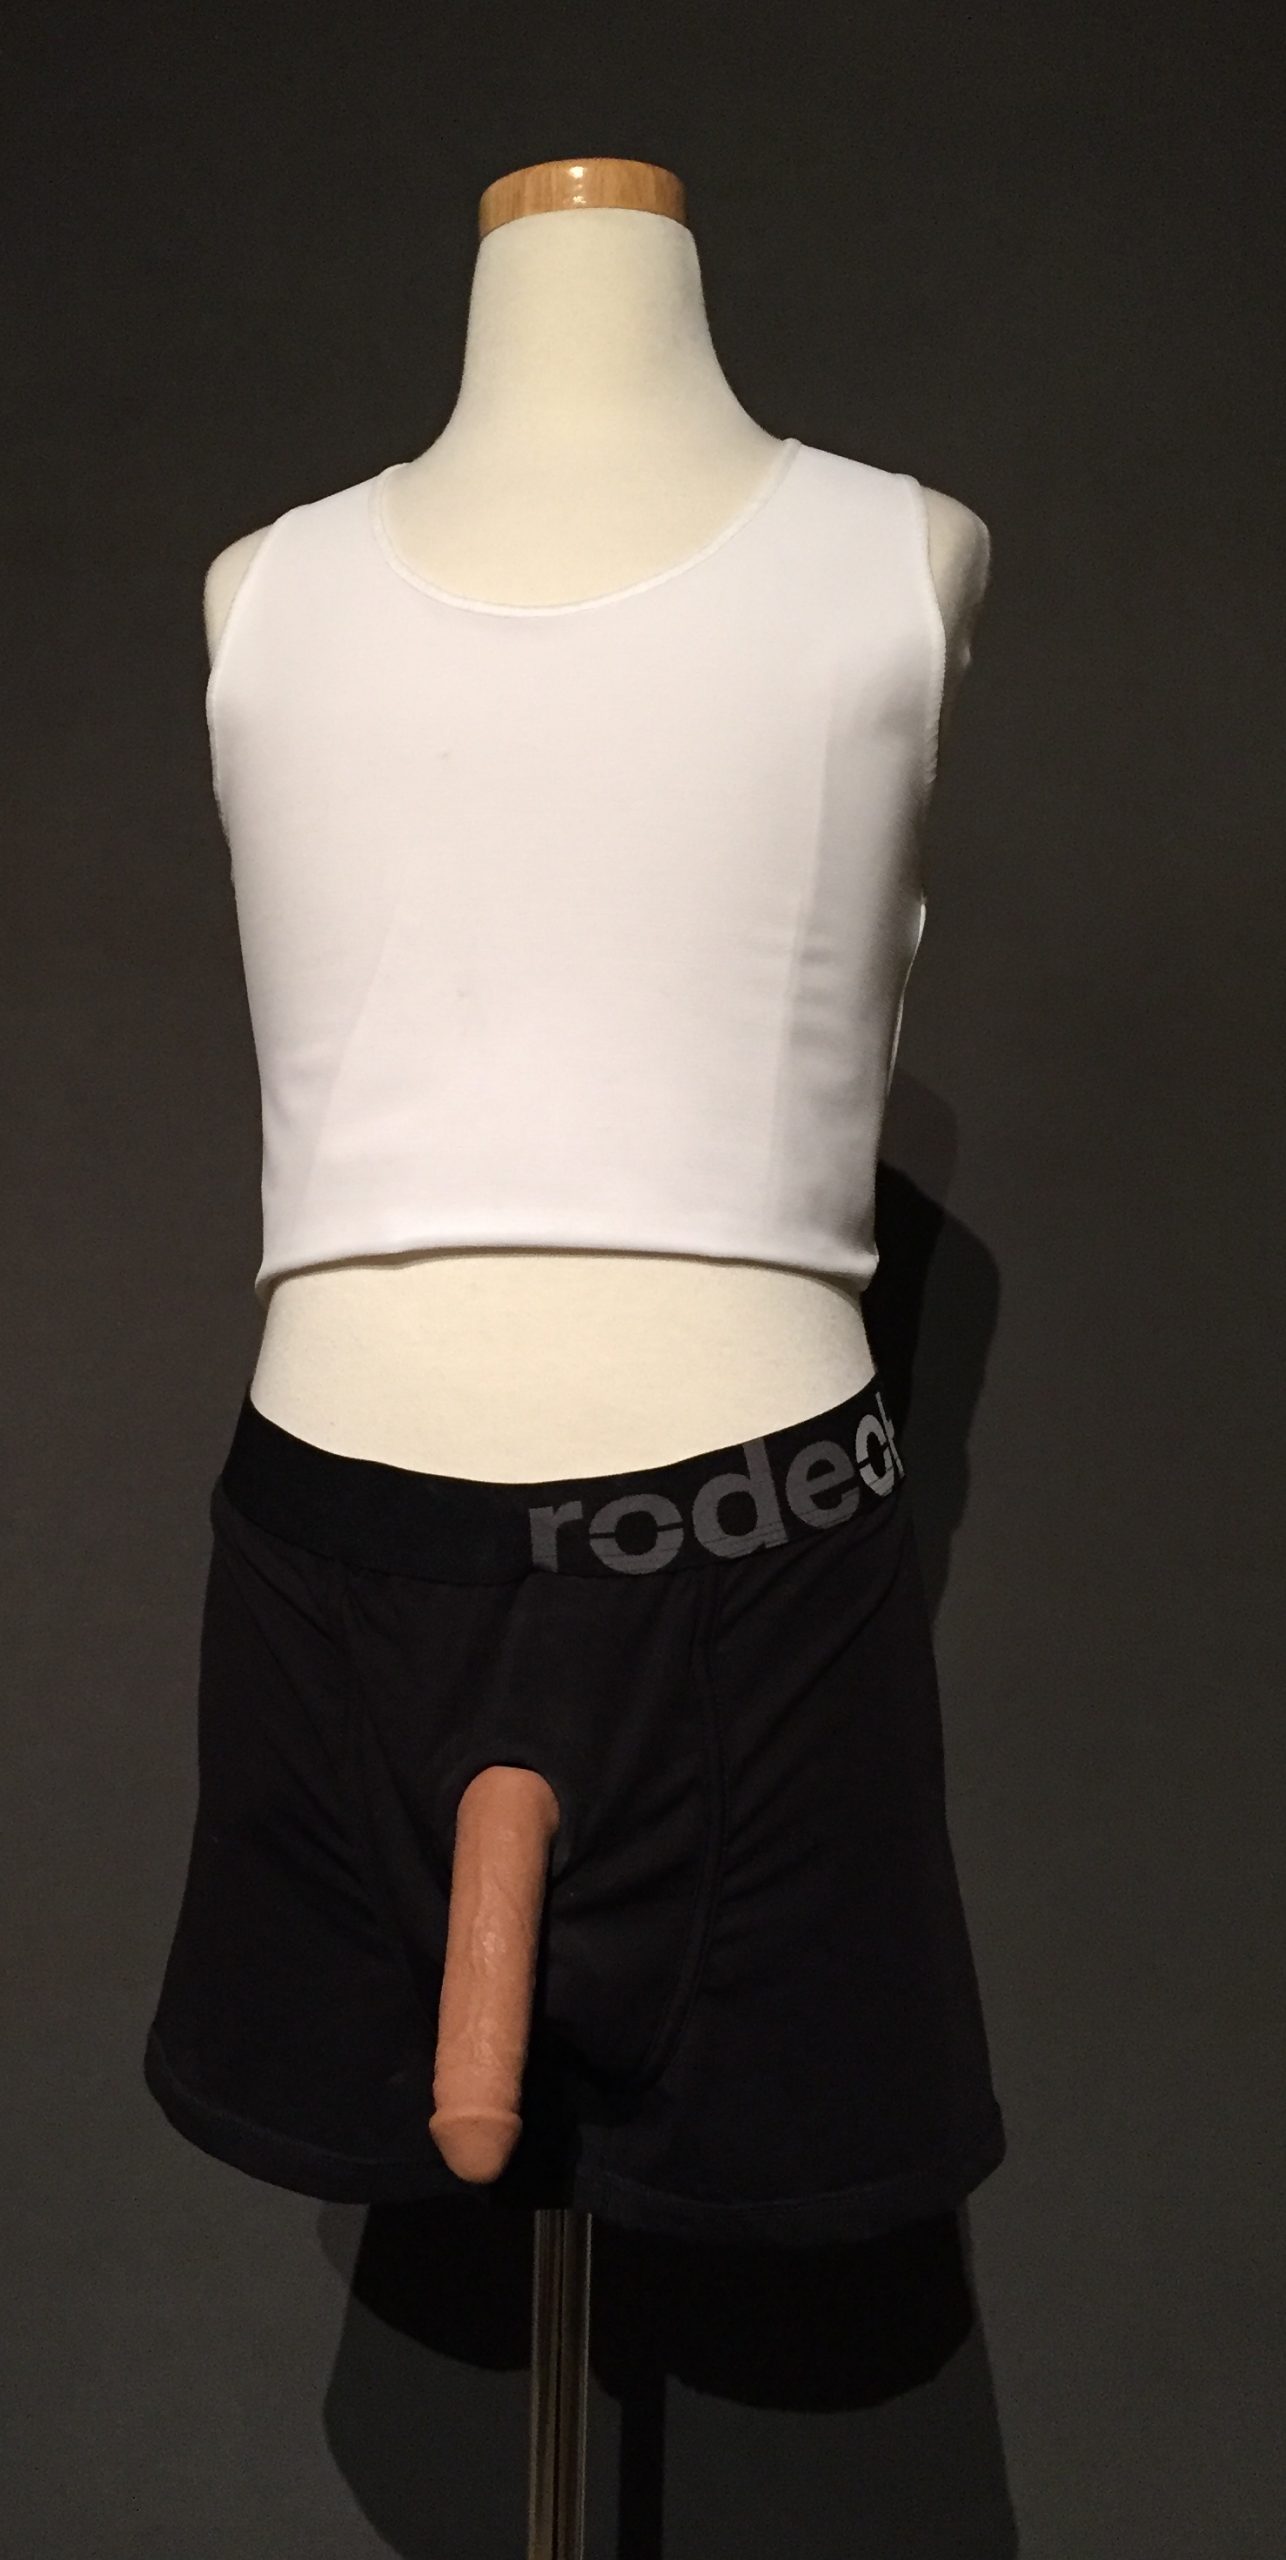 White binder, black packing underwear, realistic-looking silicone prosthetic penis AKA packer with light-medium skin tone